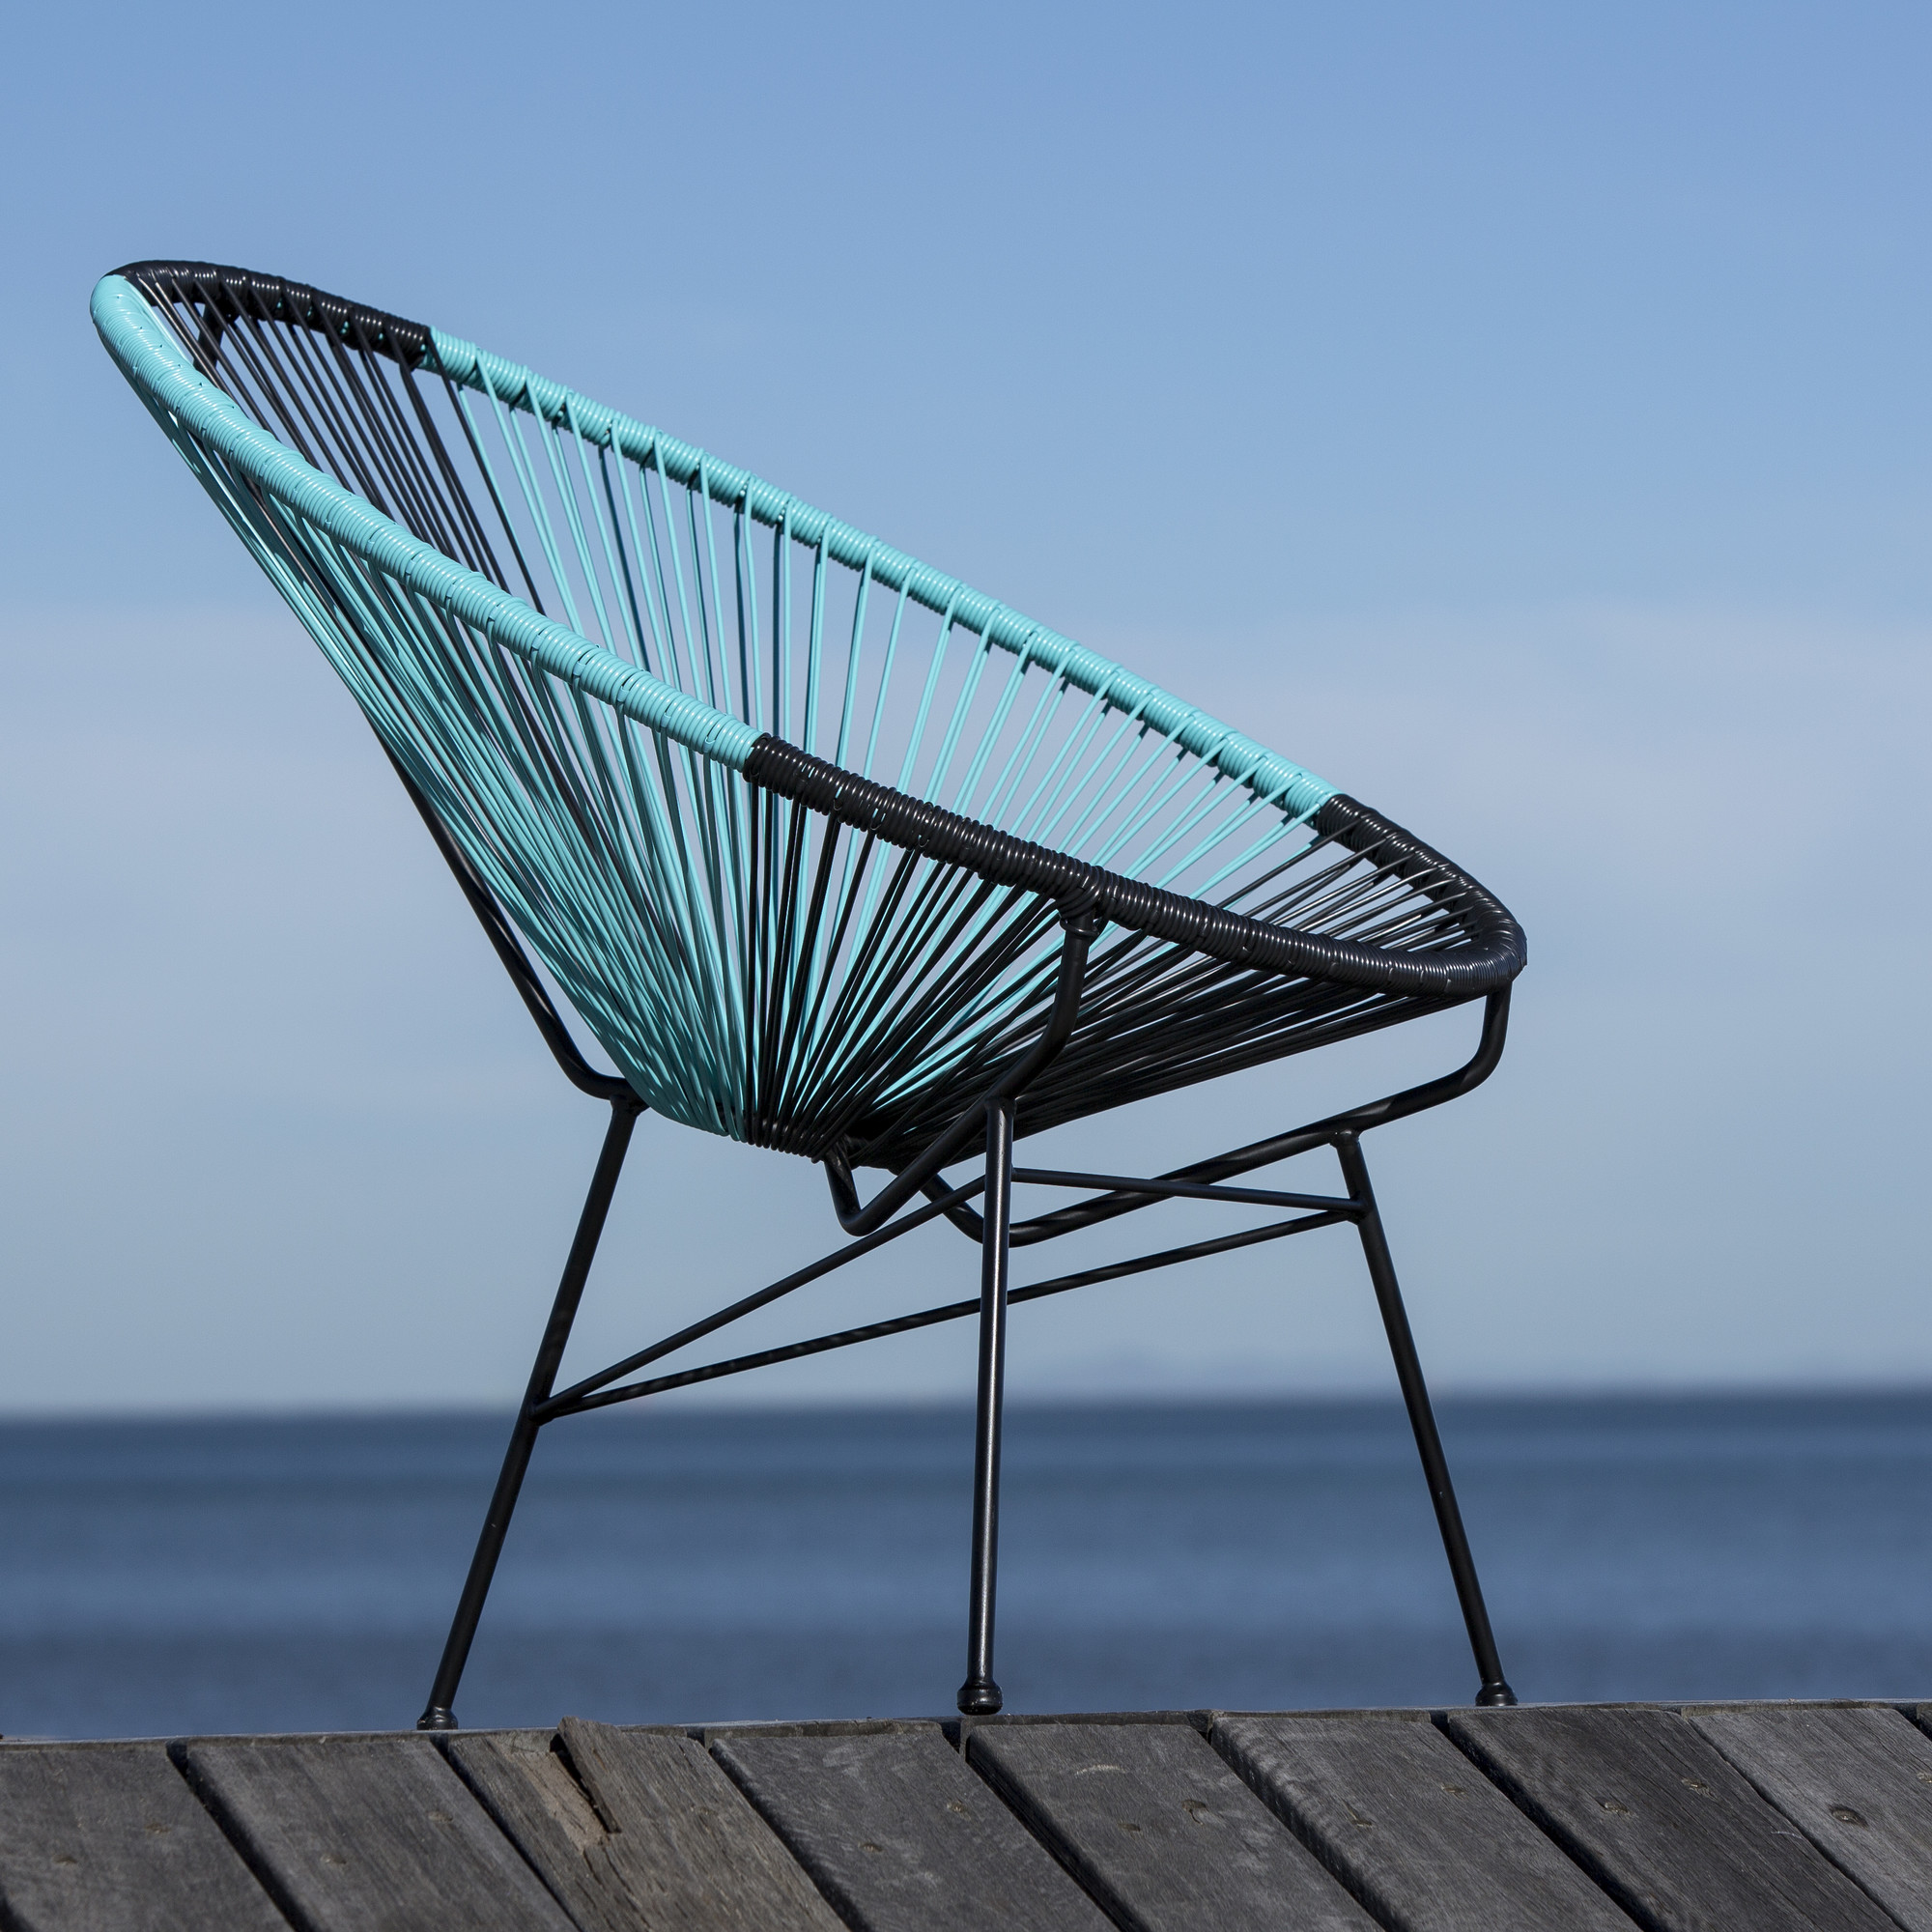 NEW Replica Outdoor Acapulco Chair eBay